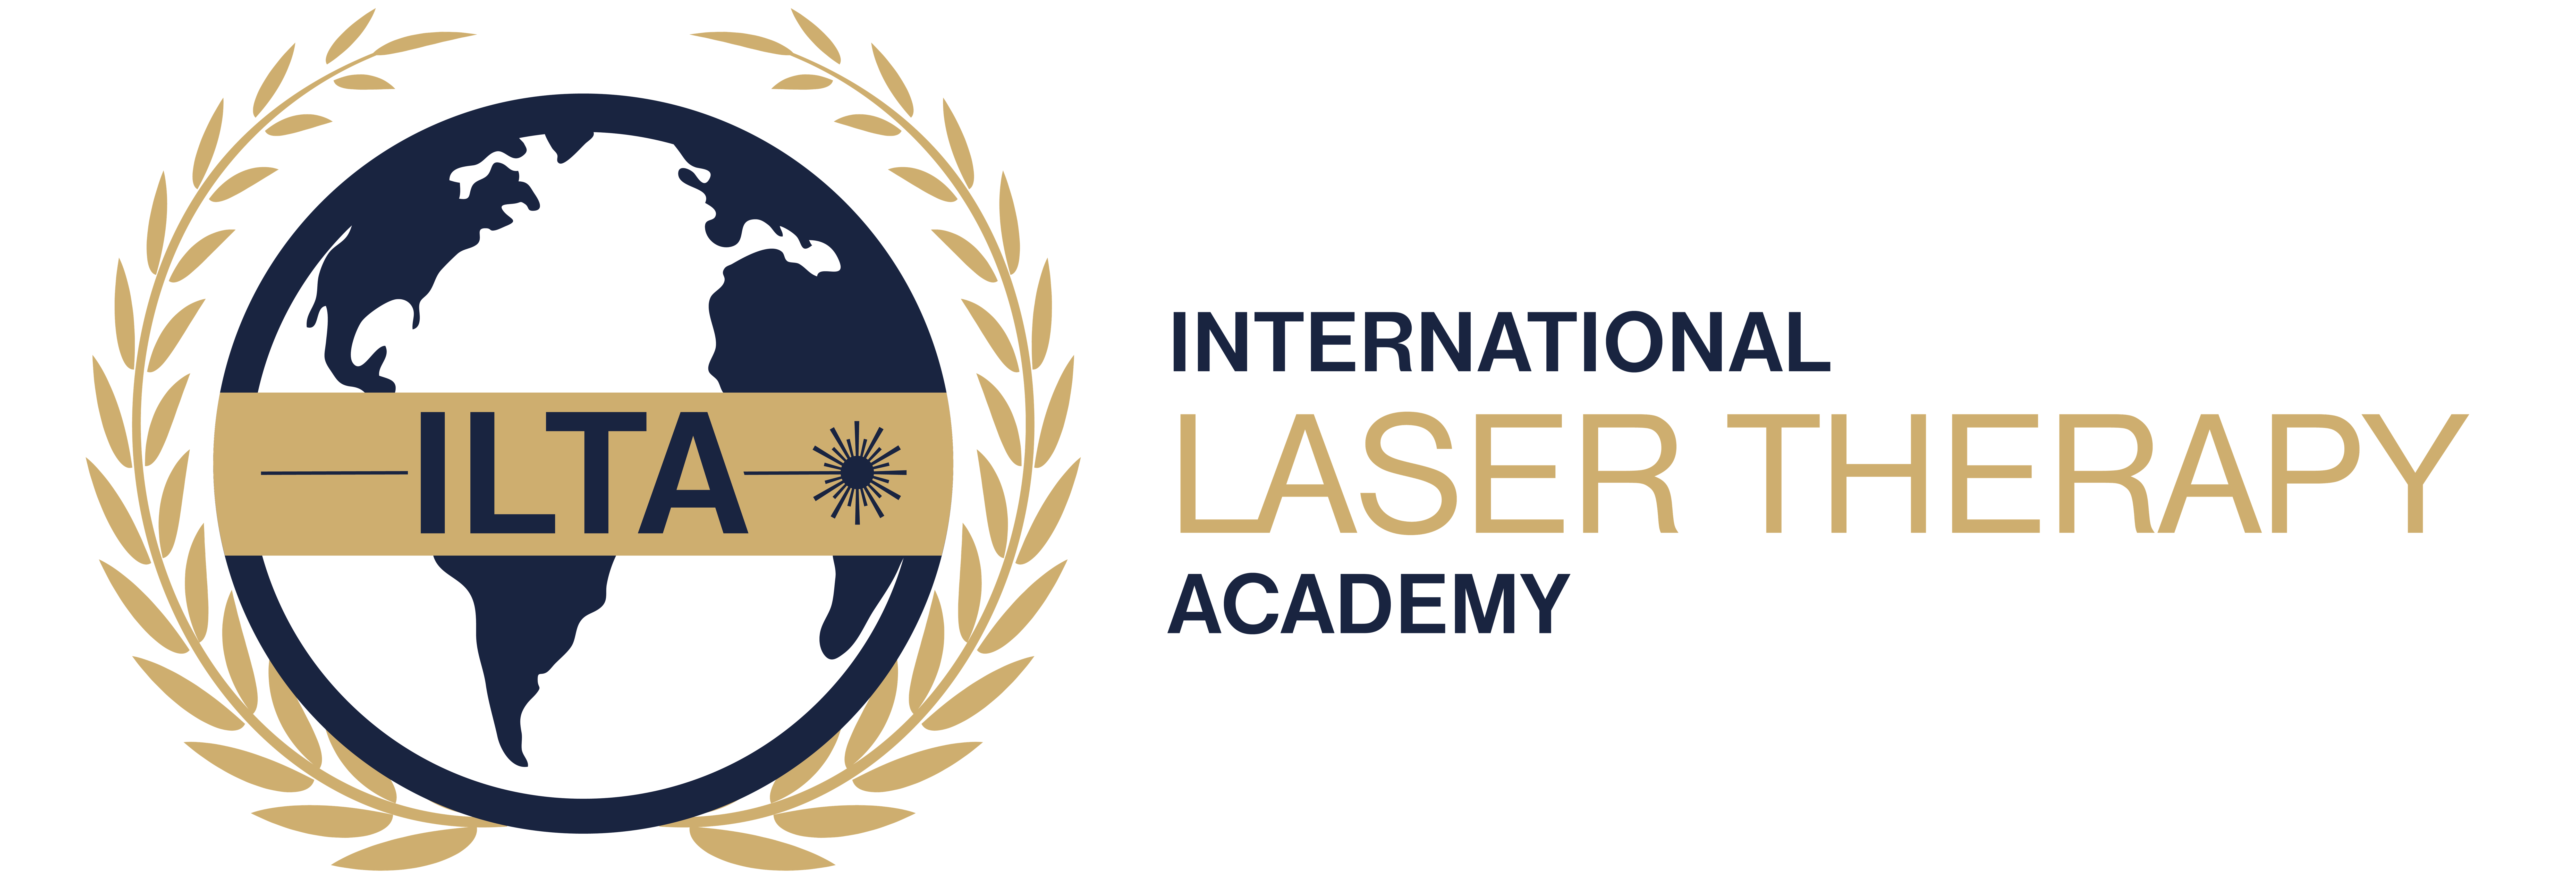 ILTA - International Laser Therapy Academy